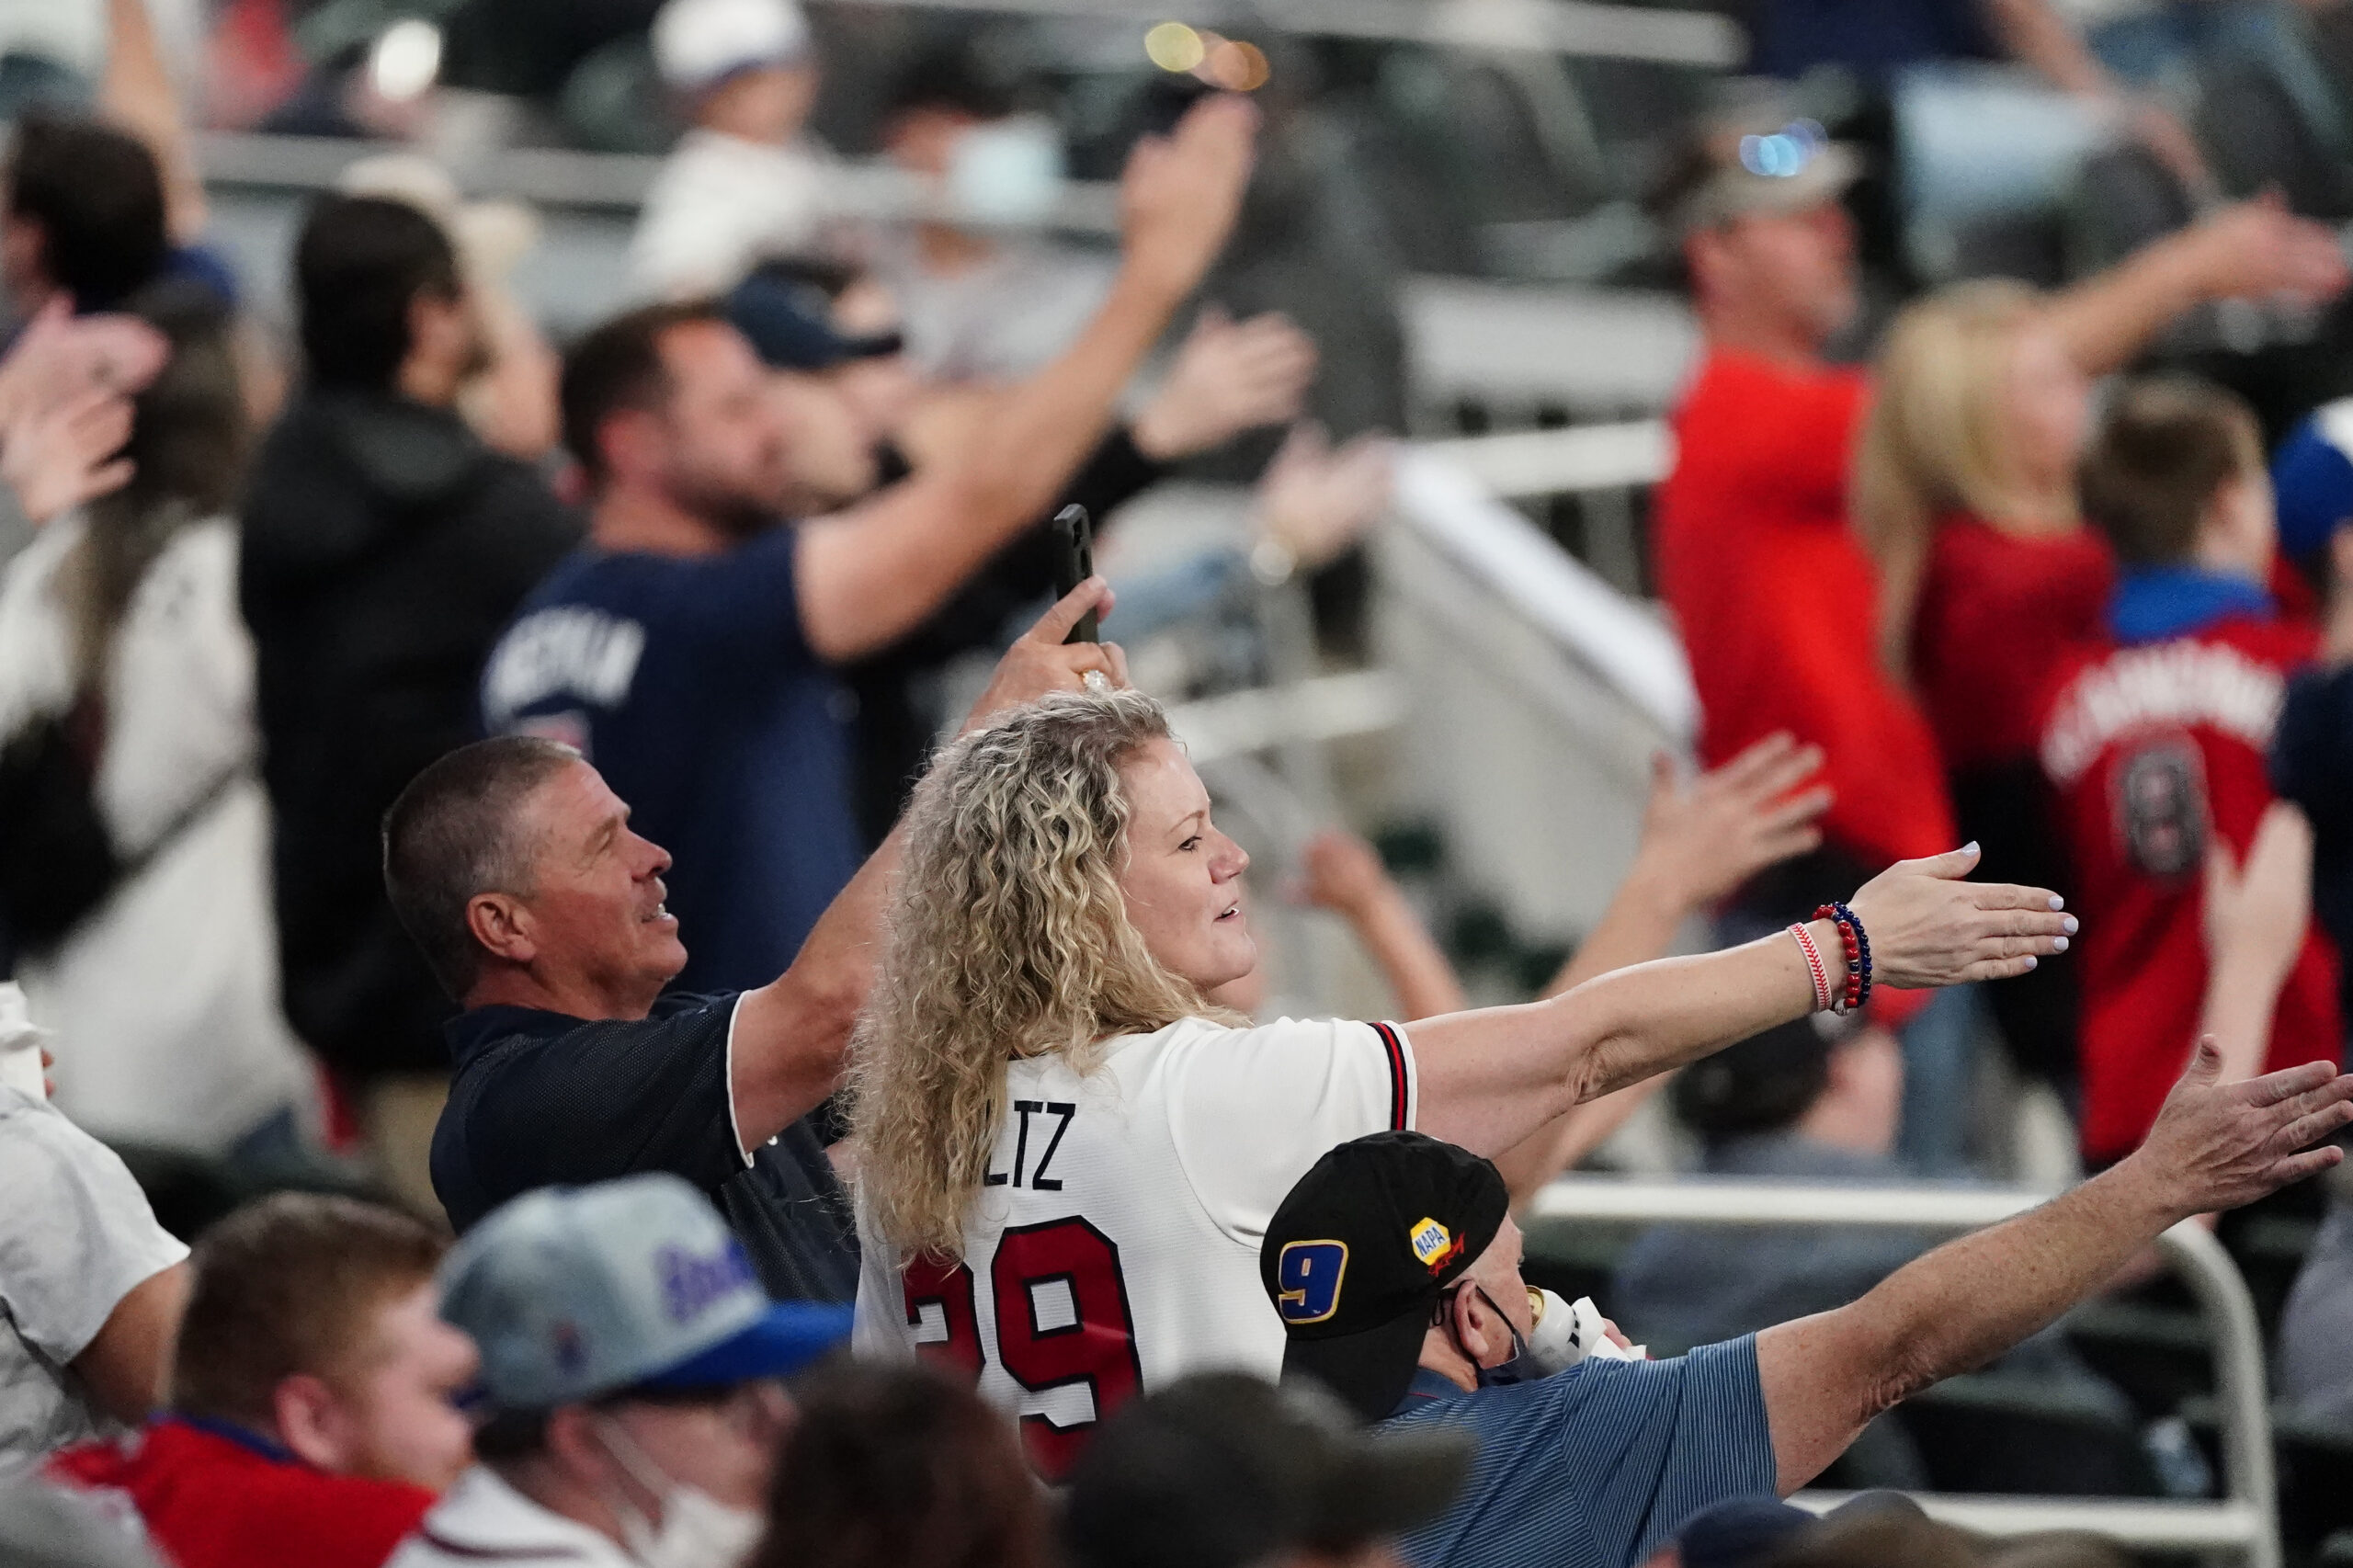 Atlanta Braves fans' tomahawk chop chant: The World Series should